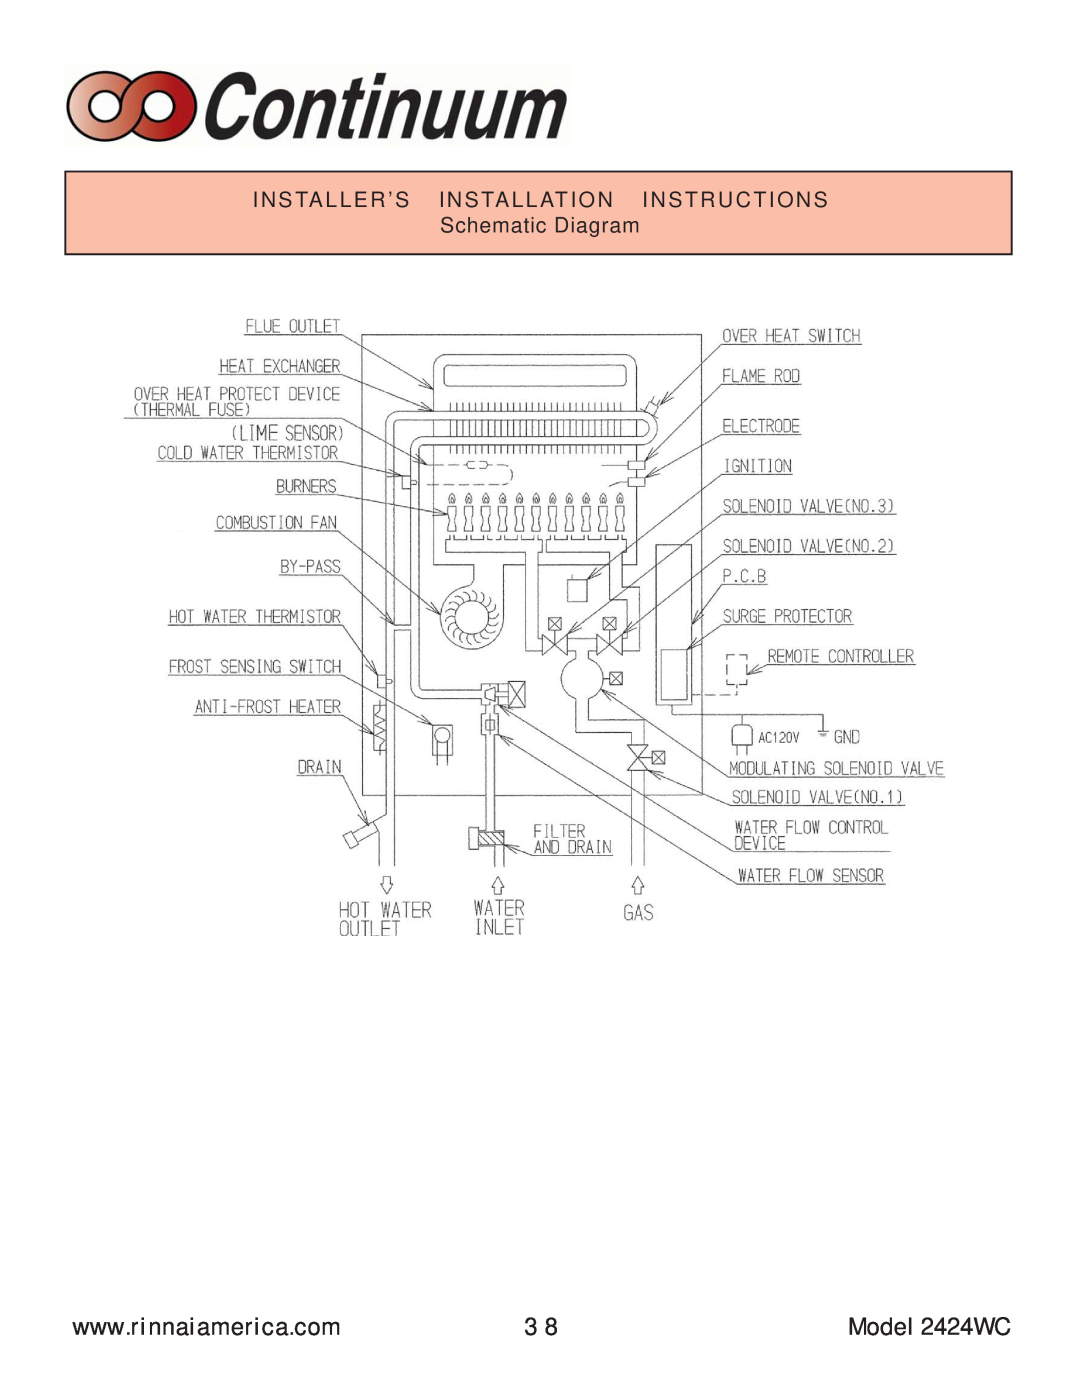 Rinnai manual Model 2424WC, Installer’S Installation Instructions, Schematic Diagram 